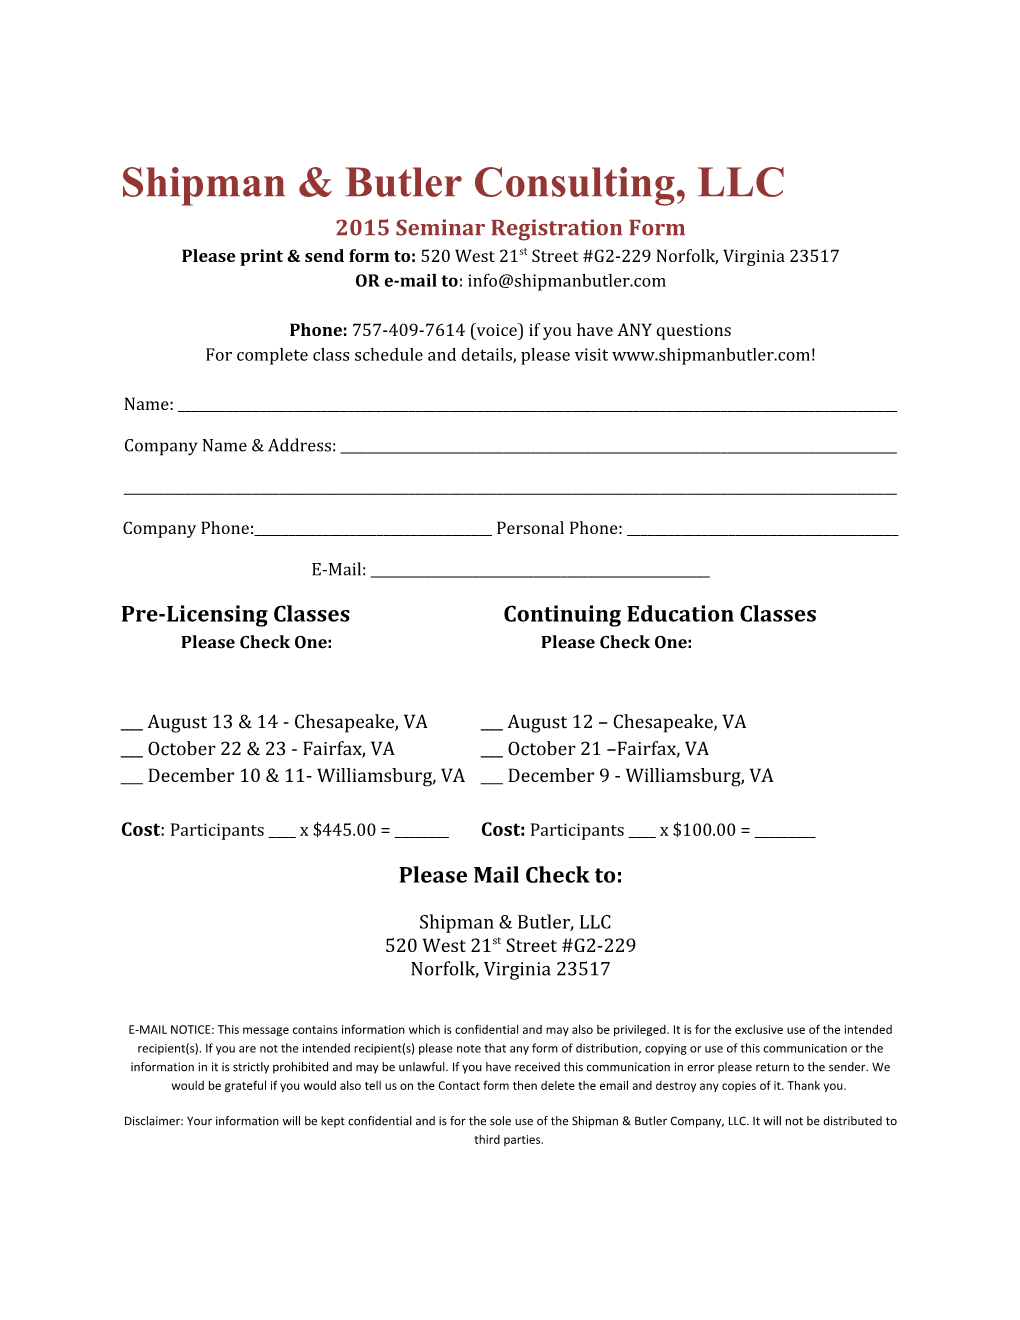 Shipman & Butler Consulting, LLC